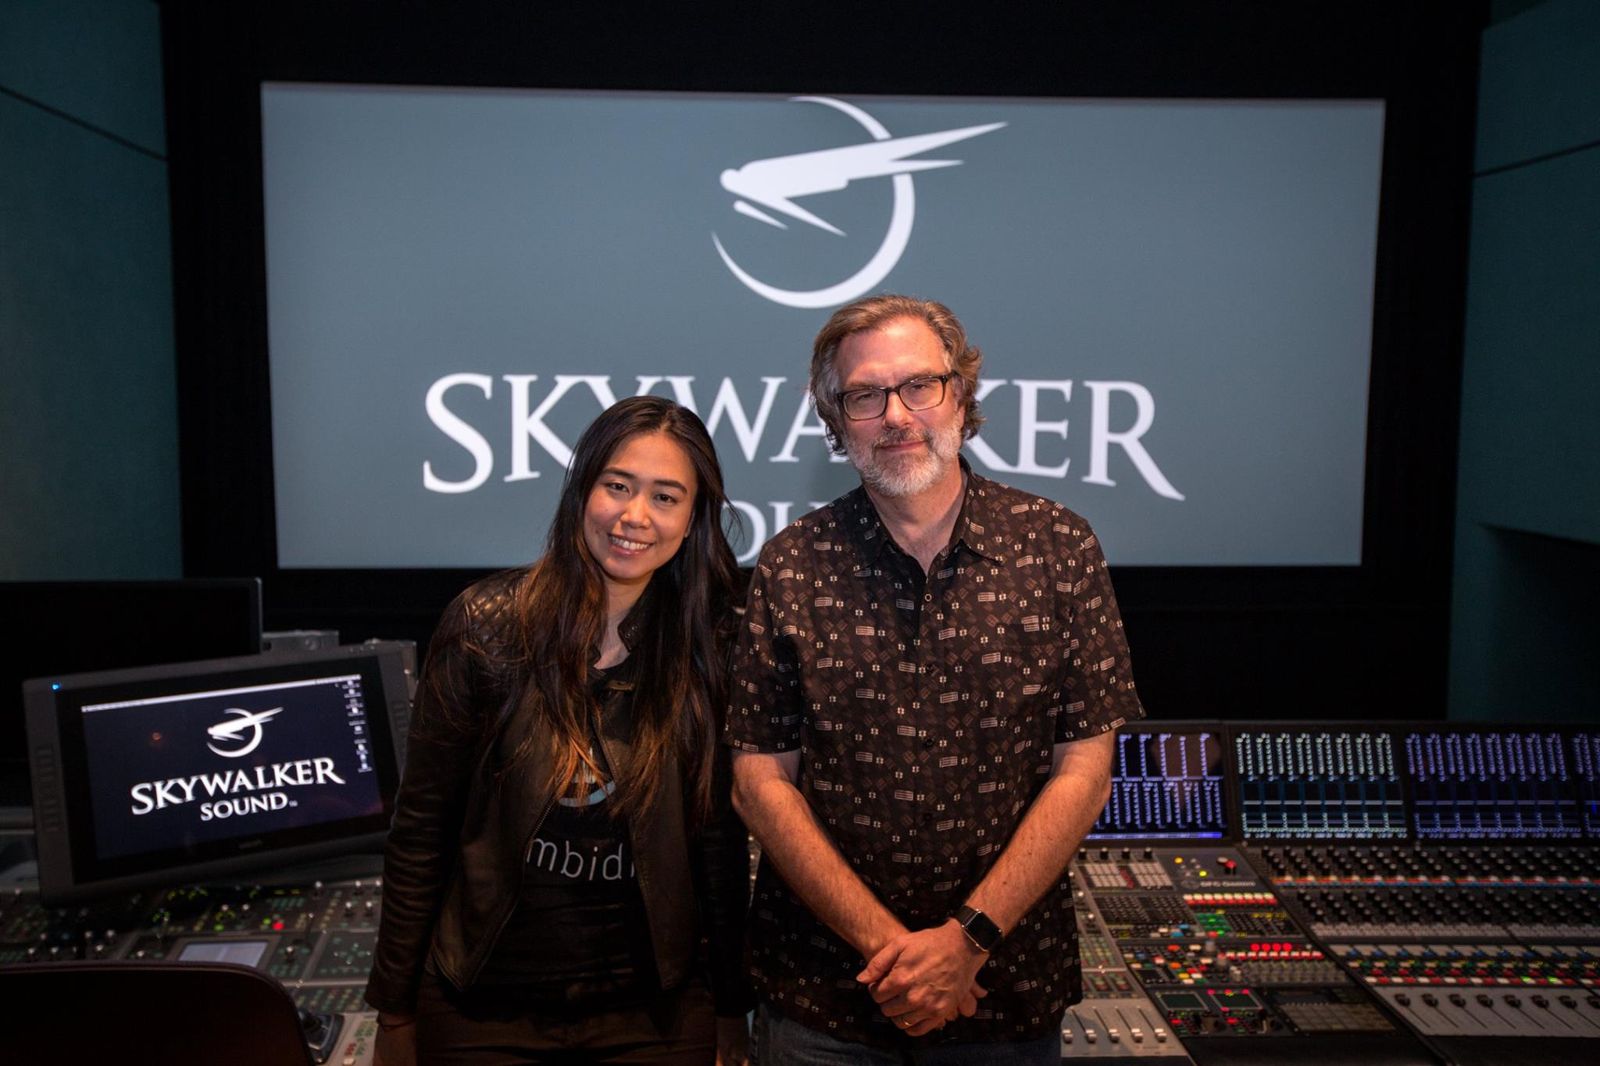 Skywalker Sound. Post Production Sound services by Skywalker Sound. Звук teams